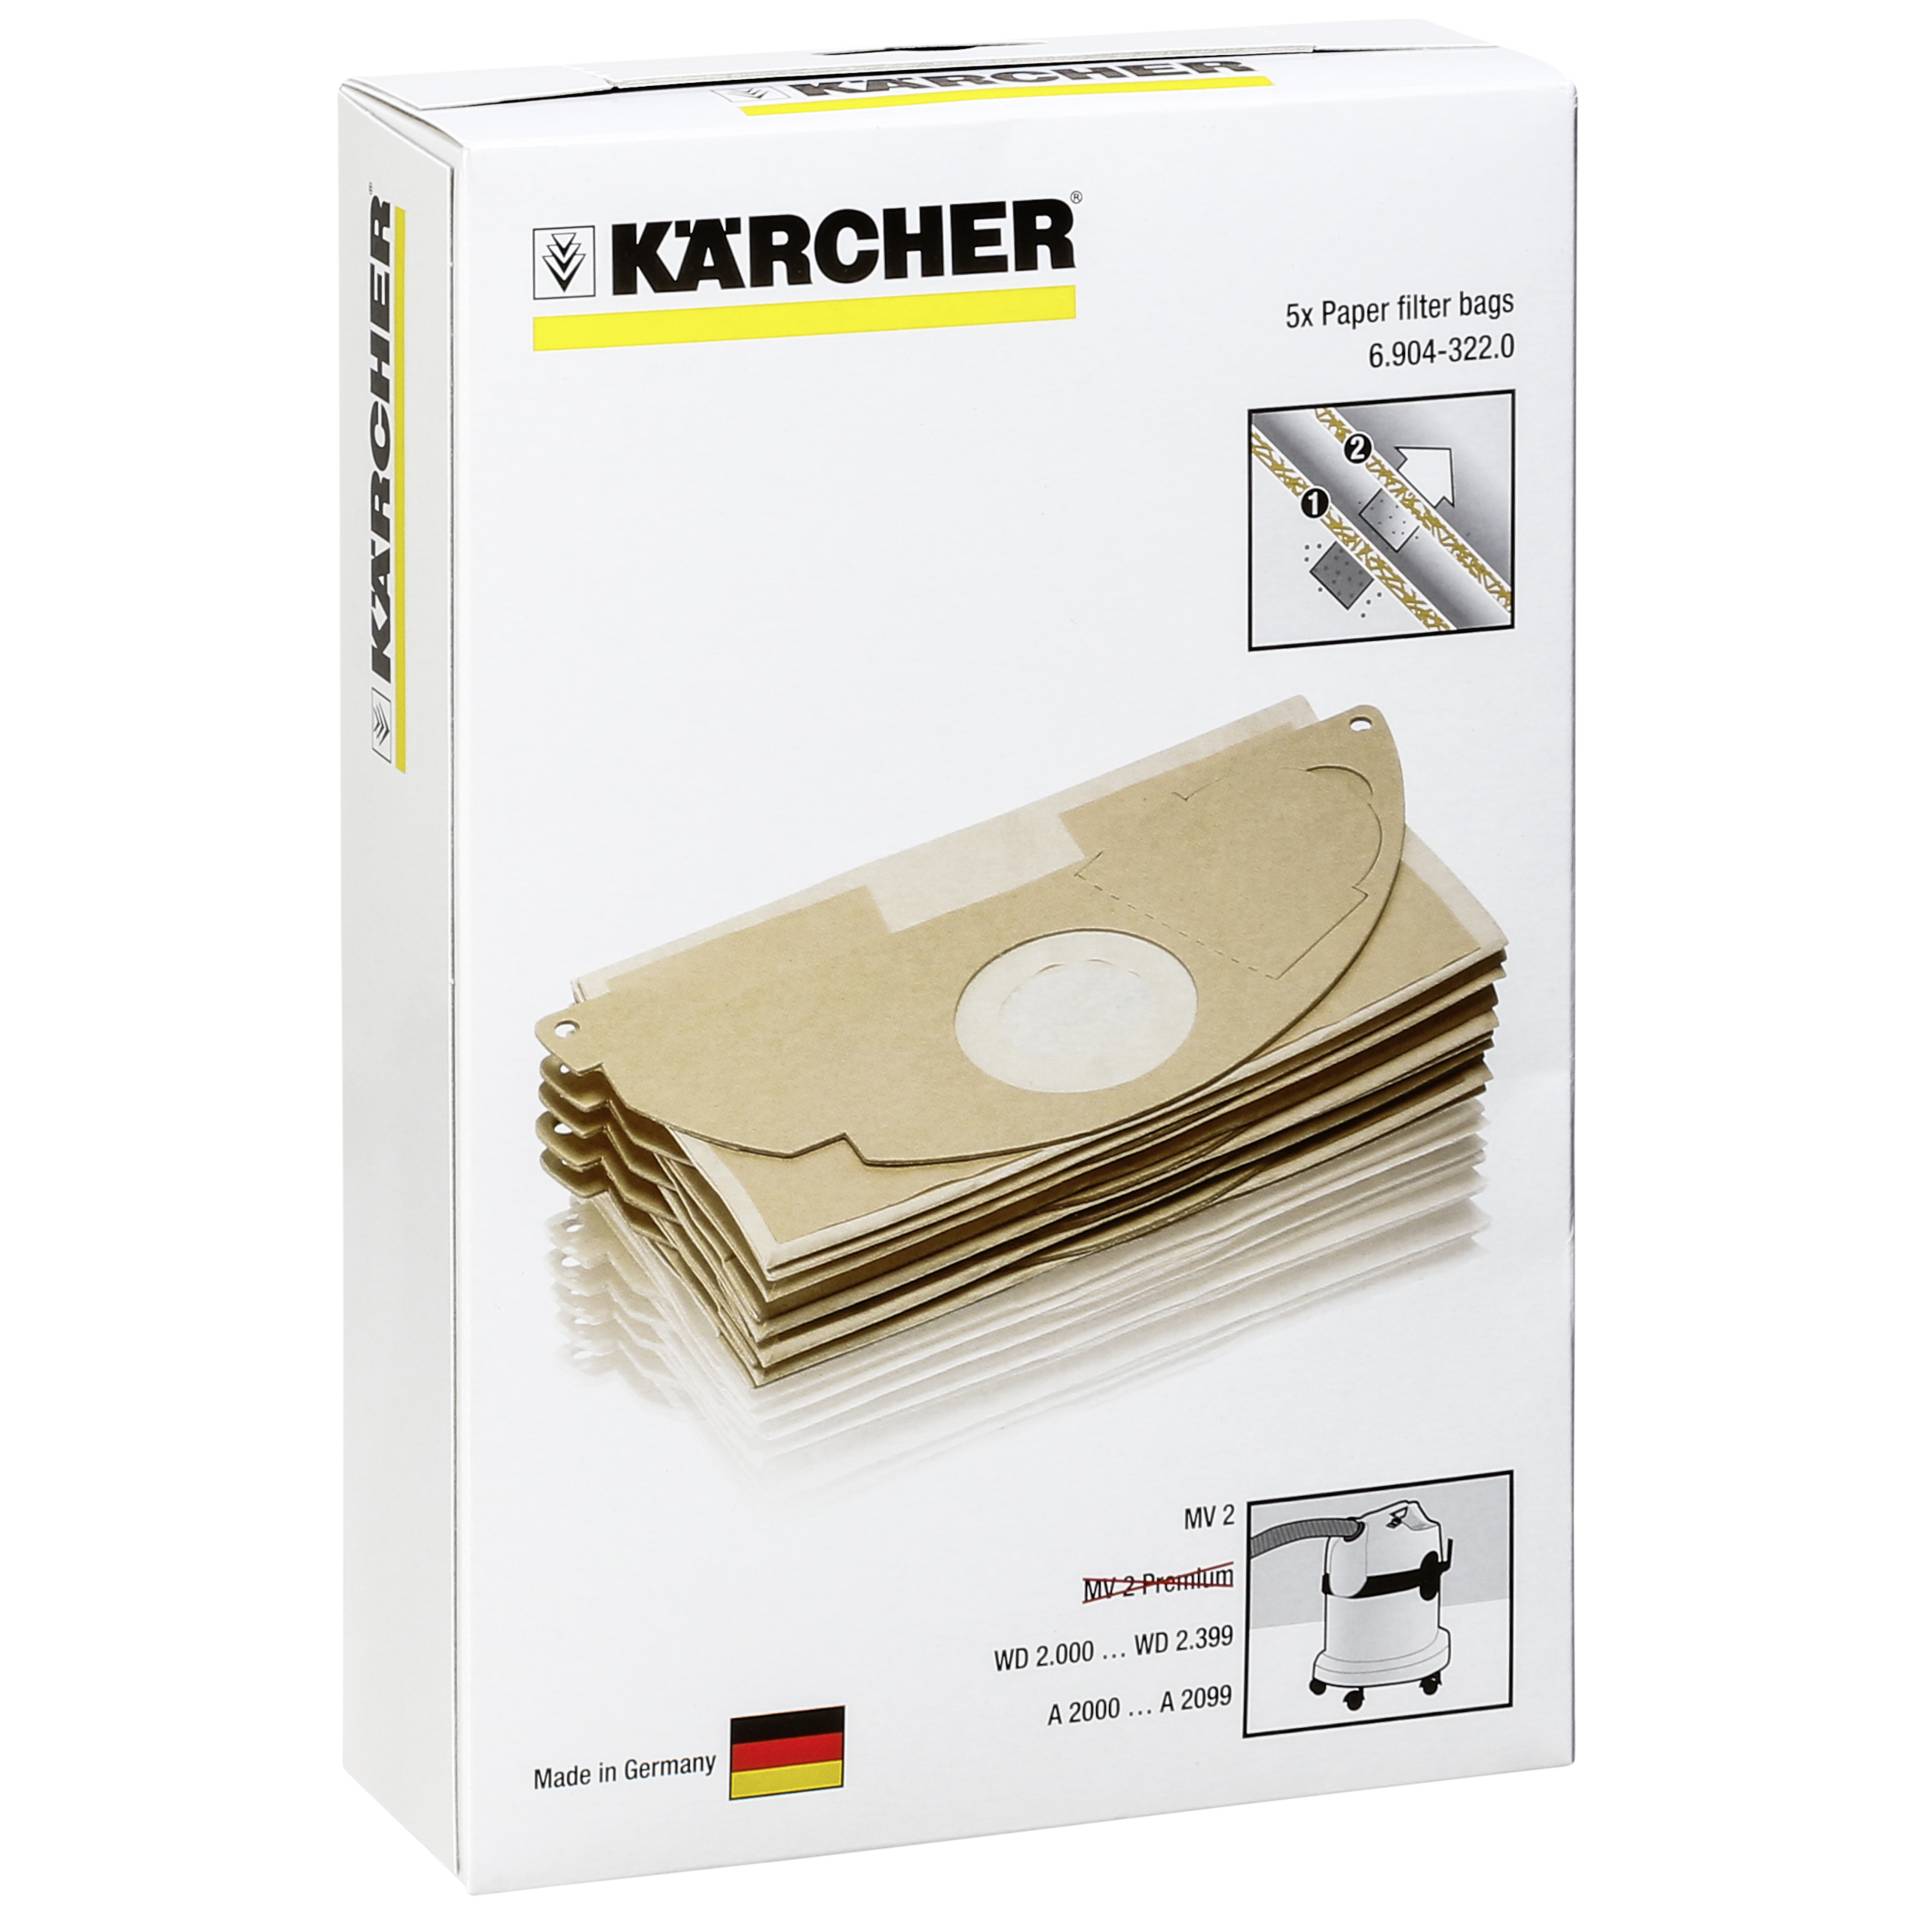 Kärcher sacchetti filtri 5 pezzi per MV 2 Serie